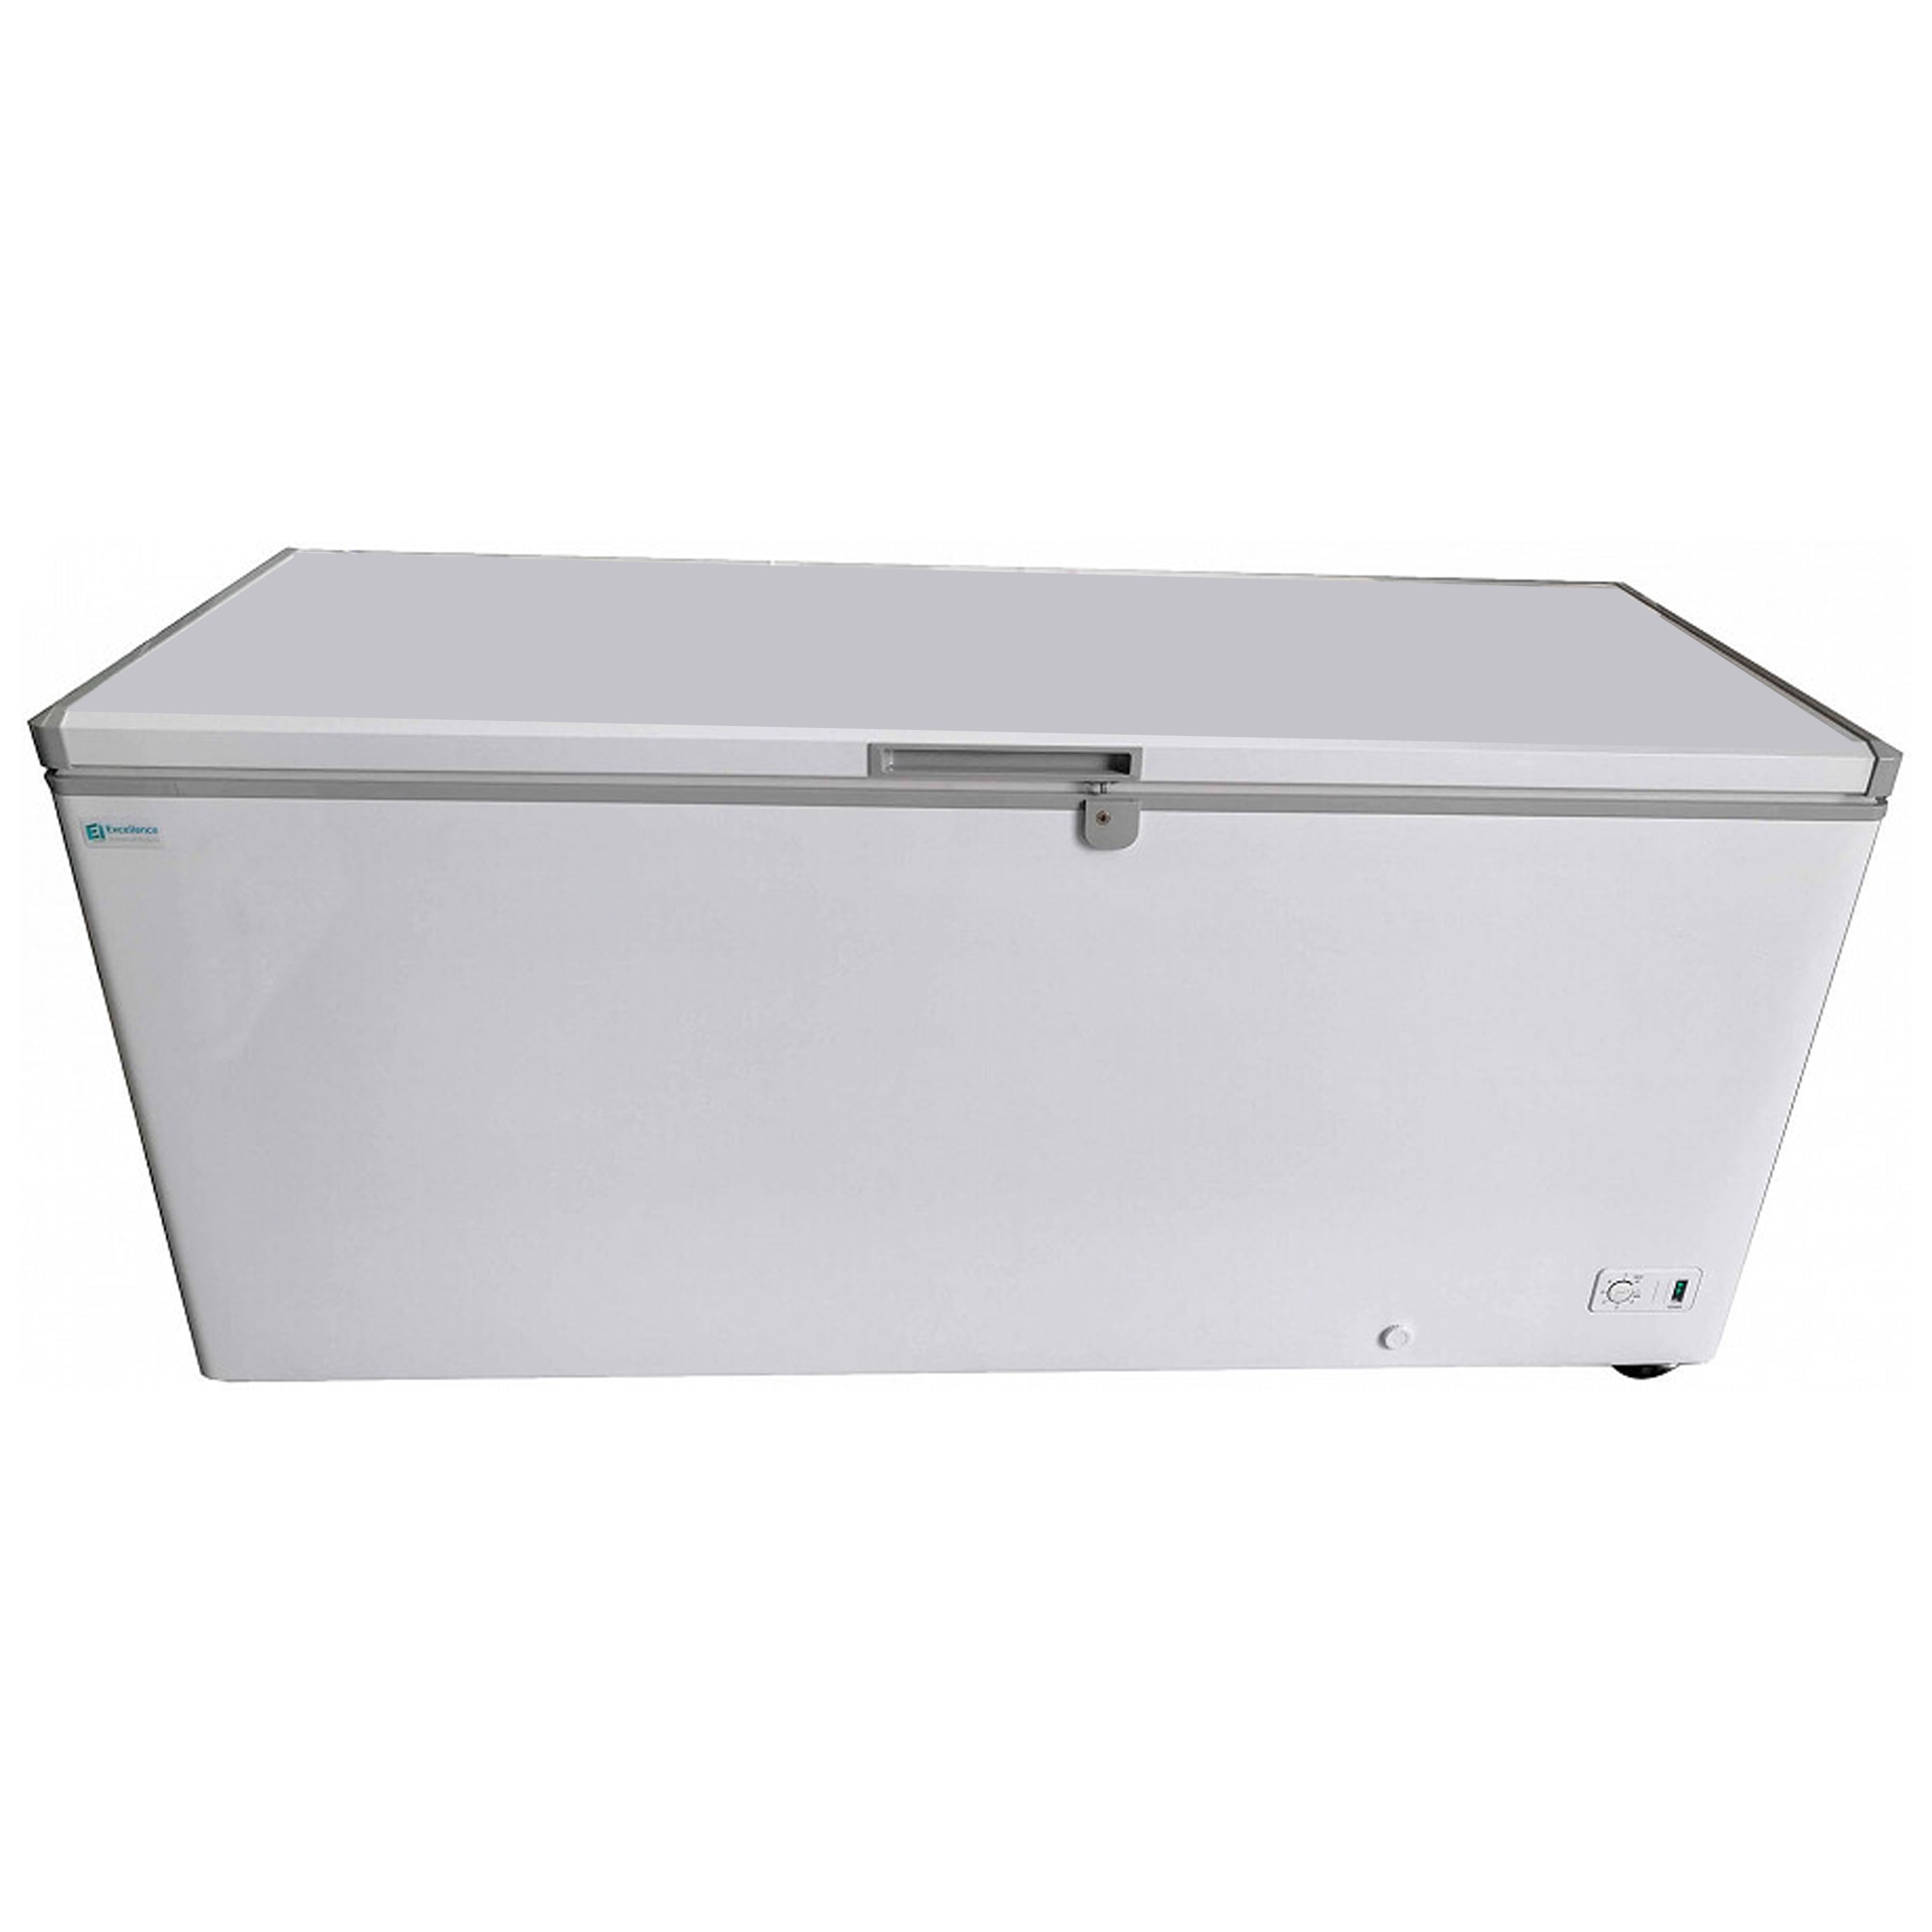 Excellence Industries - BD-19, 70" Commercial Chest Freezer 1 Solid Door 19.1 cu. ft.